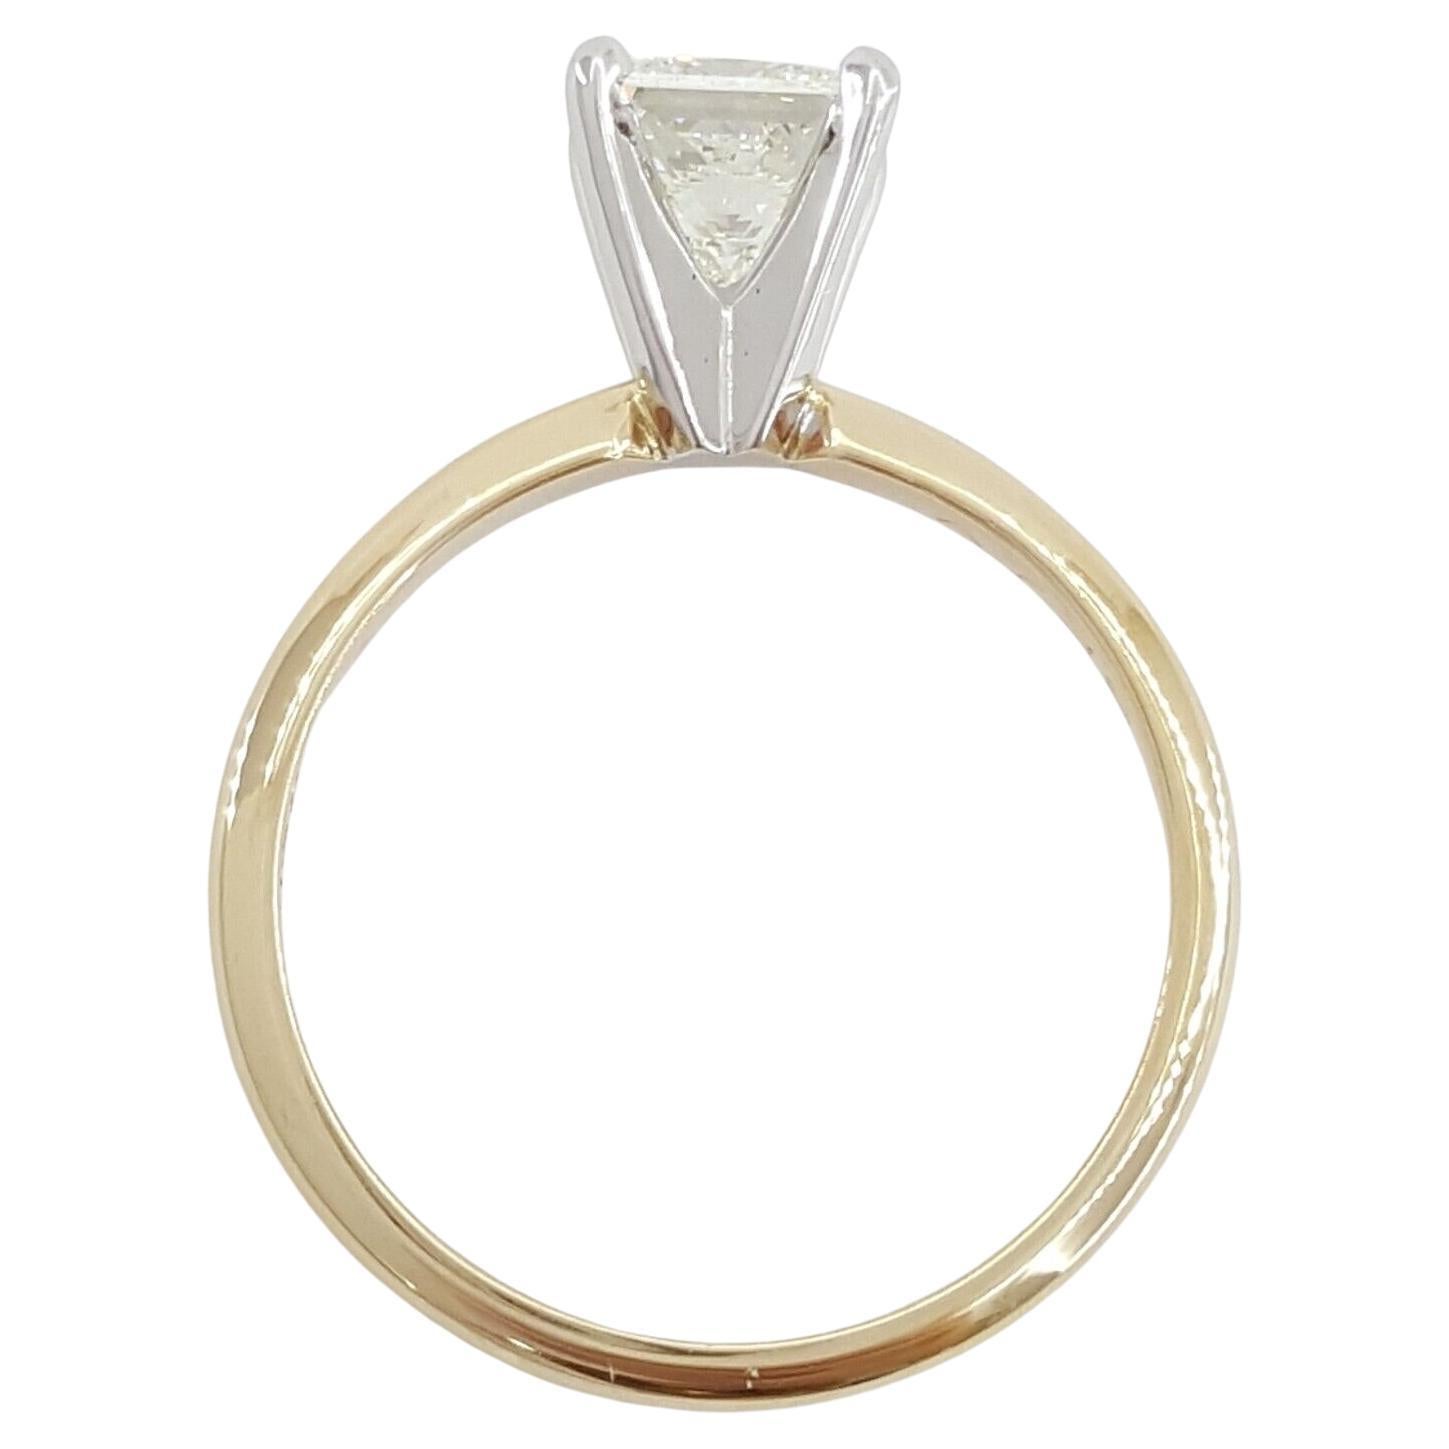 1.3 carat diamond ring